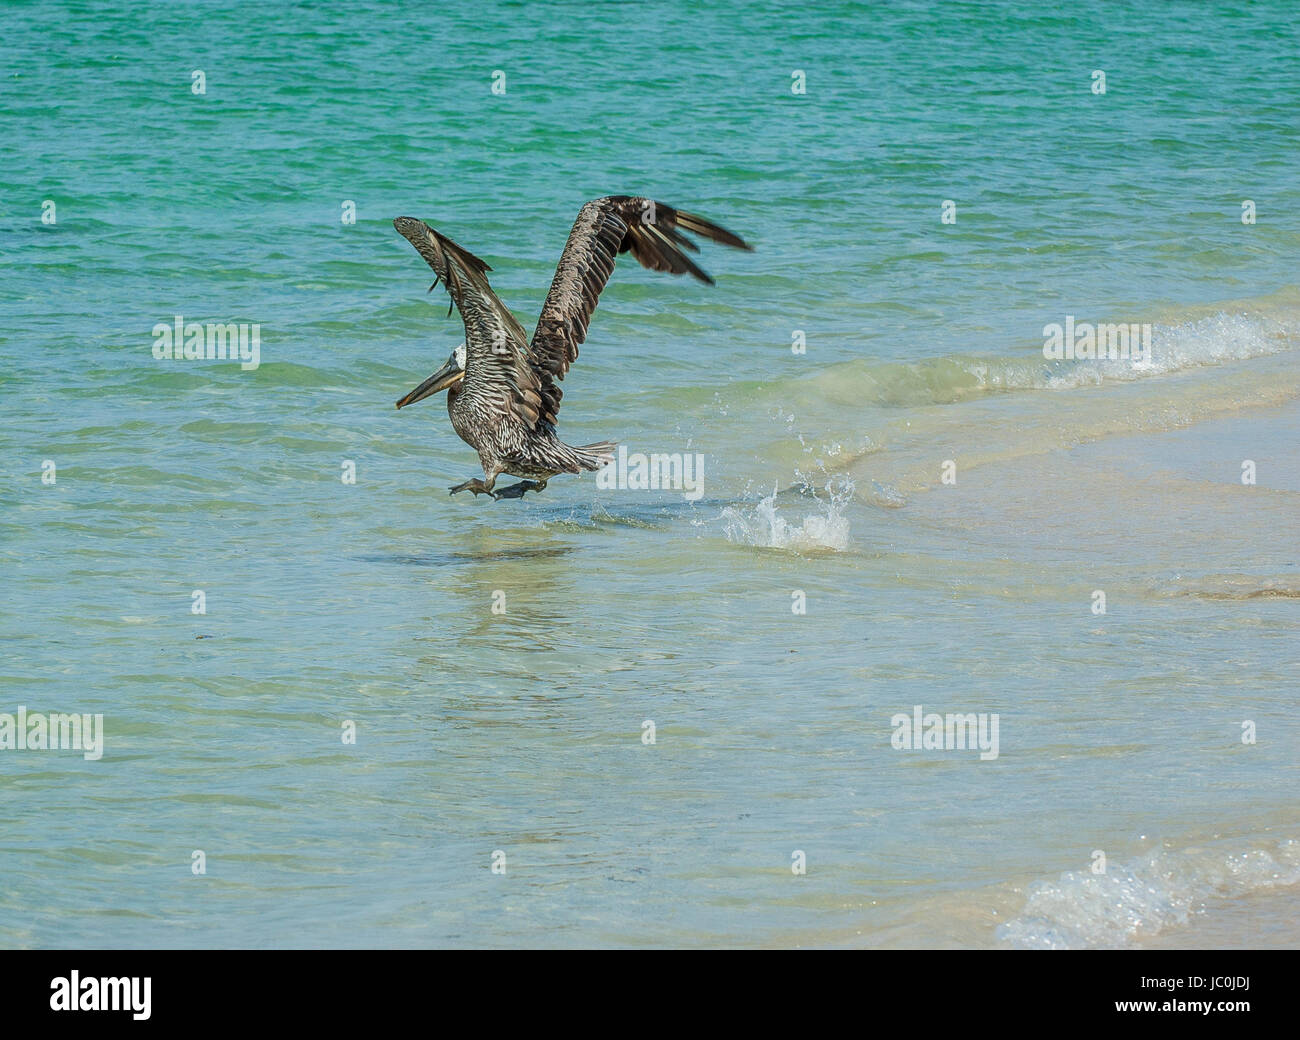 Pelican Flying Over Tecolote Beach In La Paz, Baja California Sur. Mexico Stock Photo